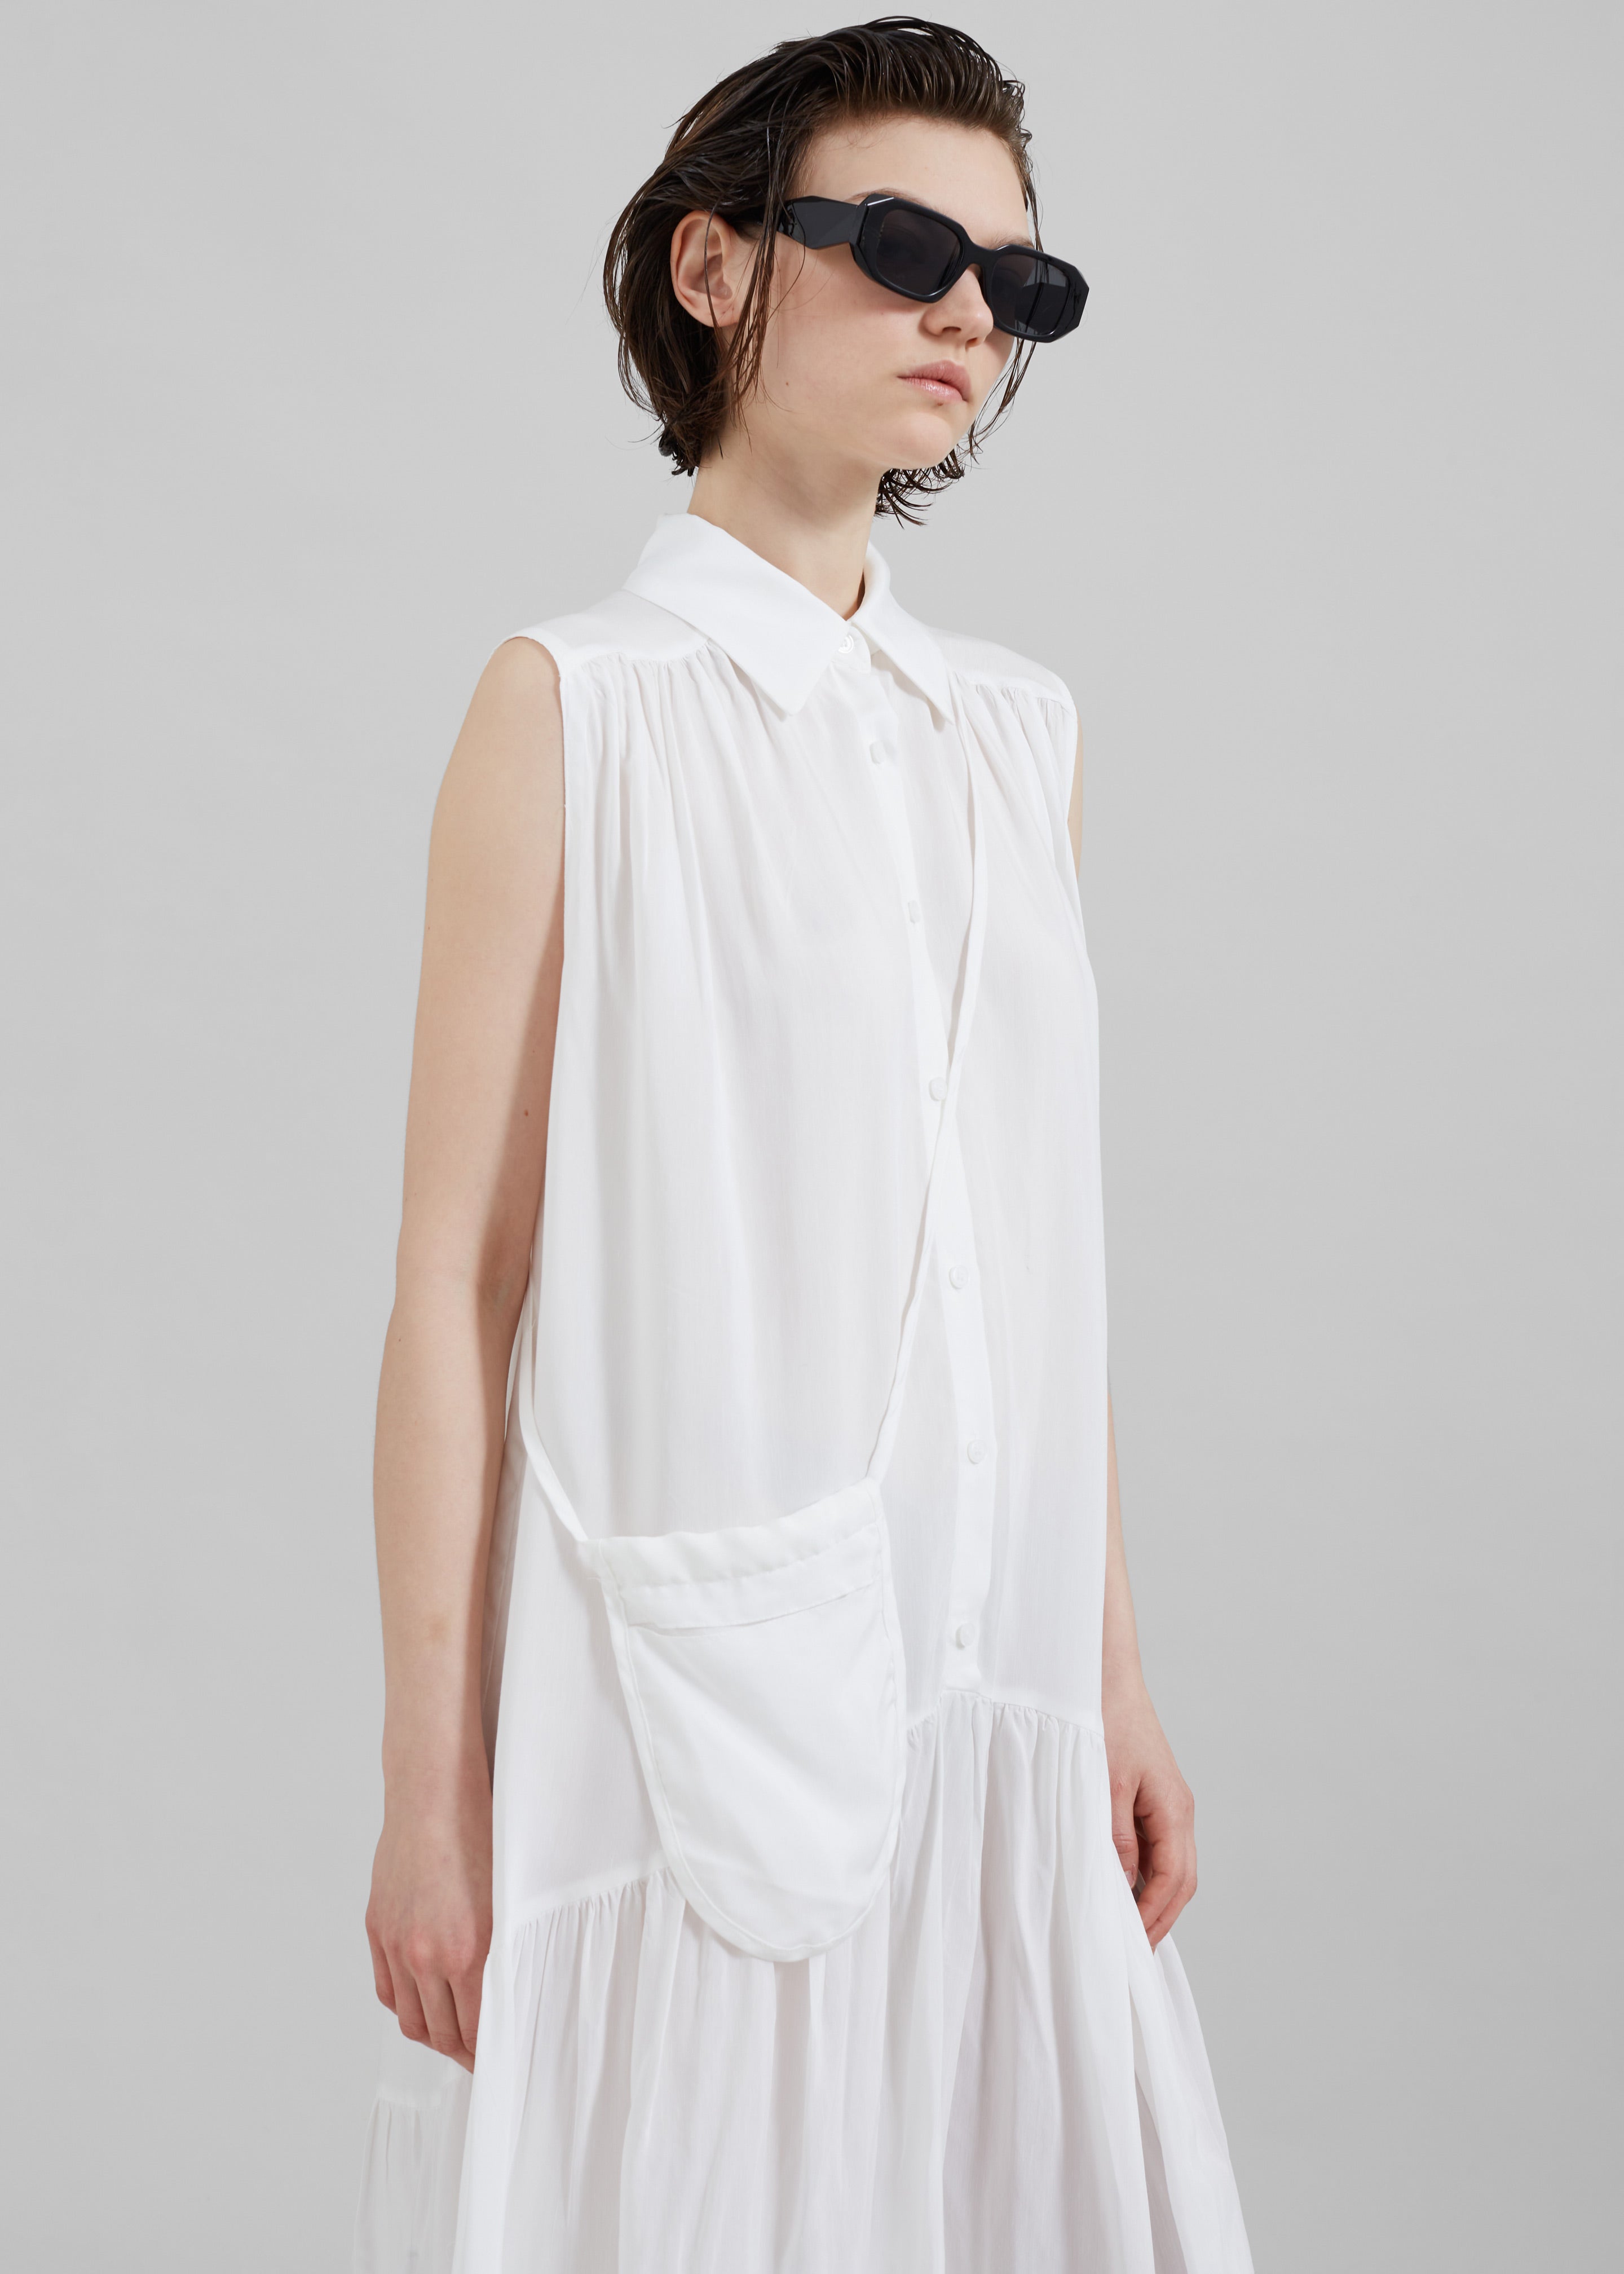 Maela Button Up Midi Dress - White - 4